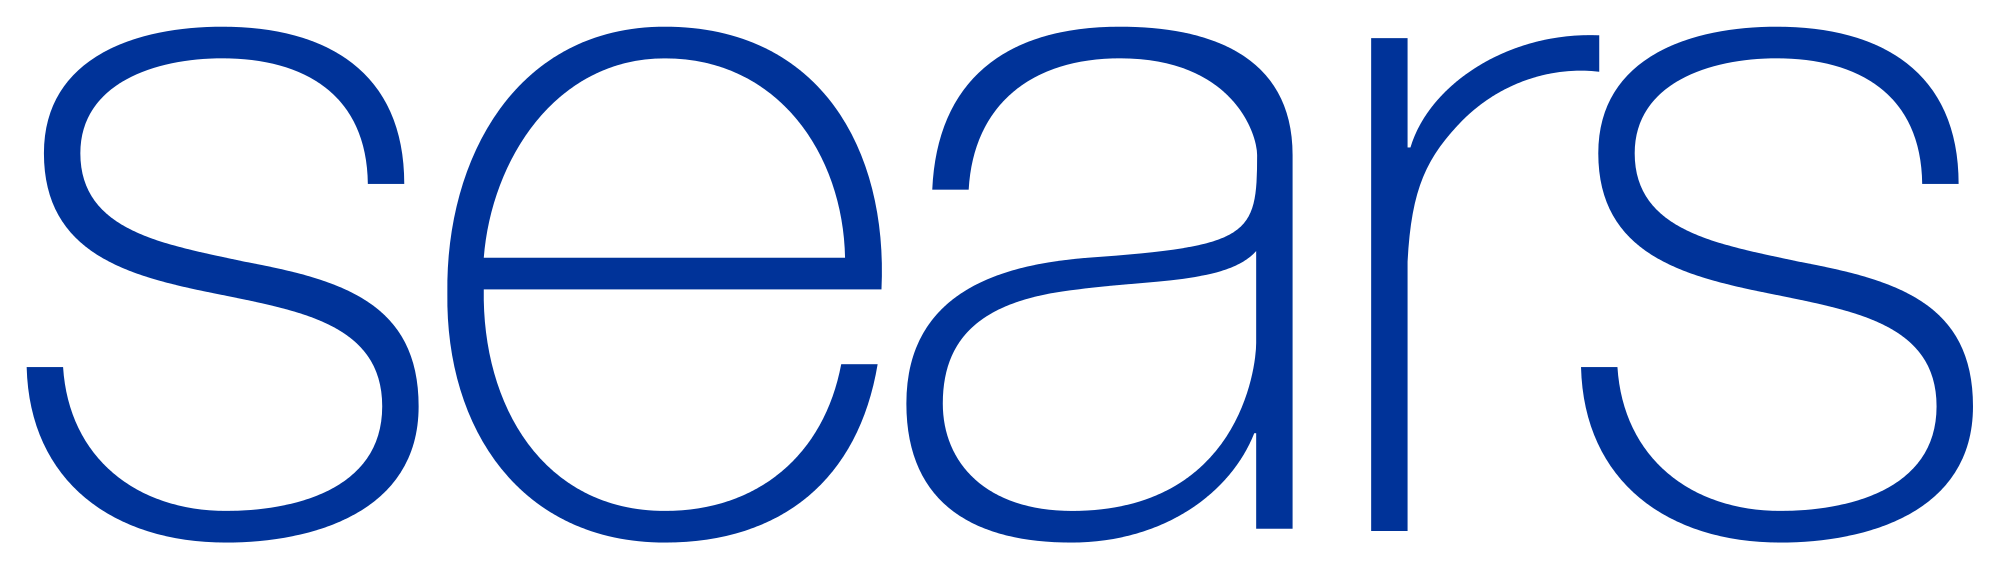 Sears Logo - File:Sears logo 2010-present.svg - Wikimedia Commons